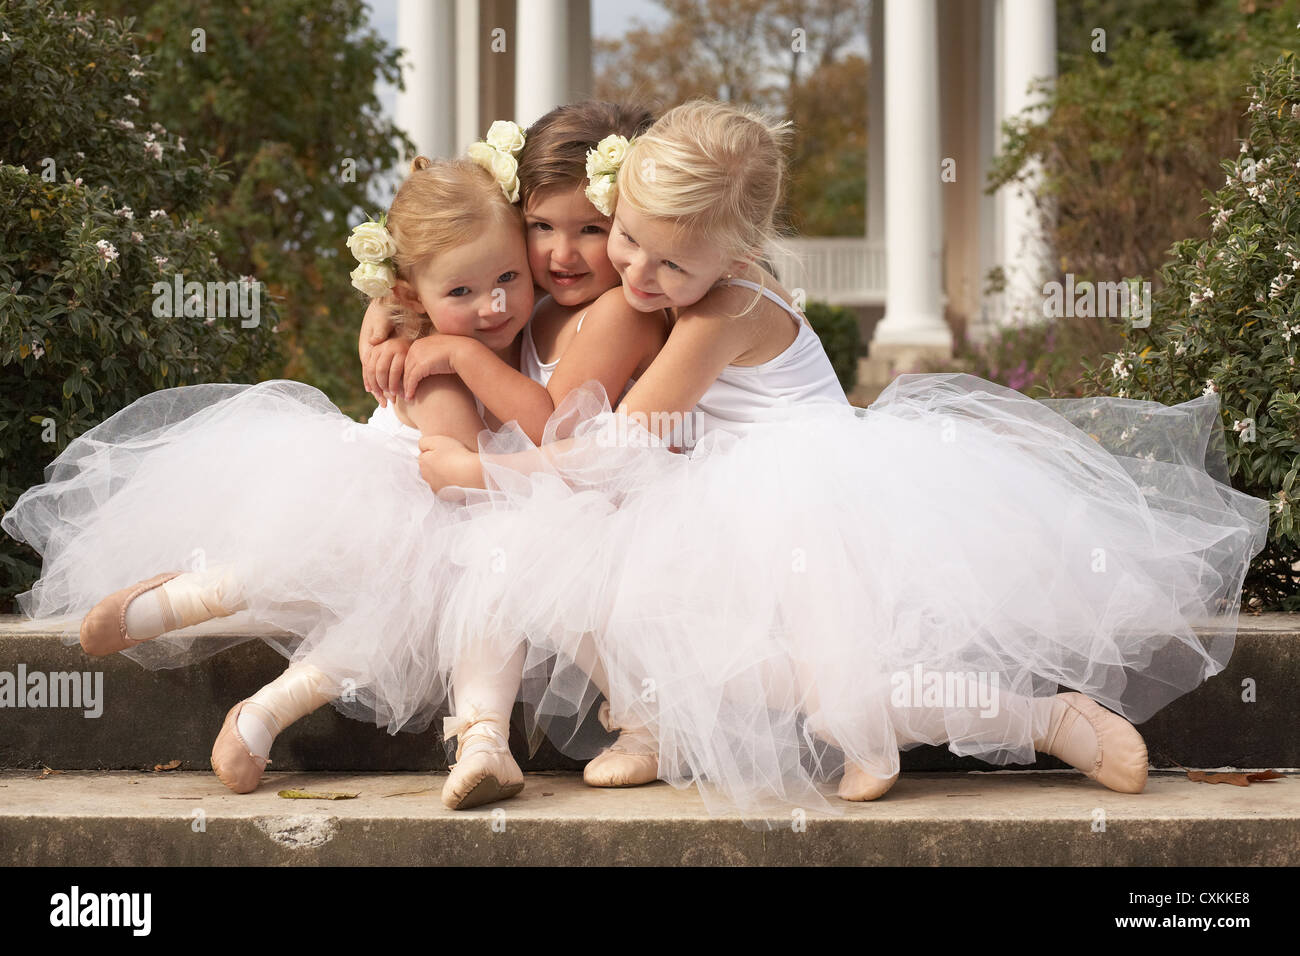 girls hugging in ballet costumes Stock Photo